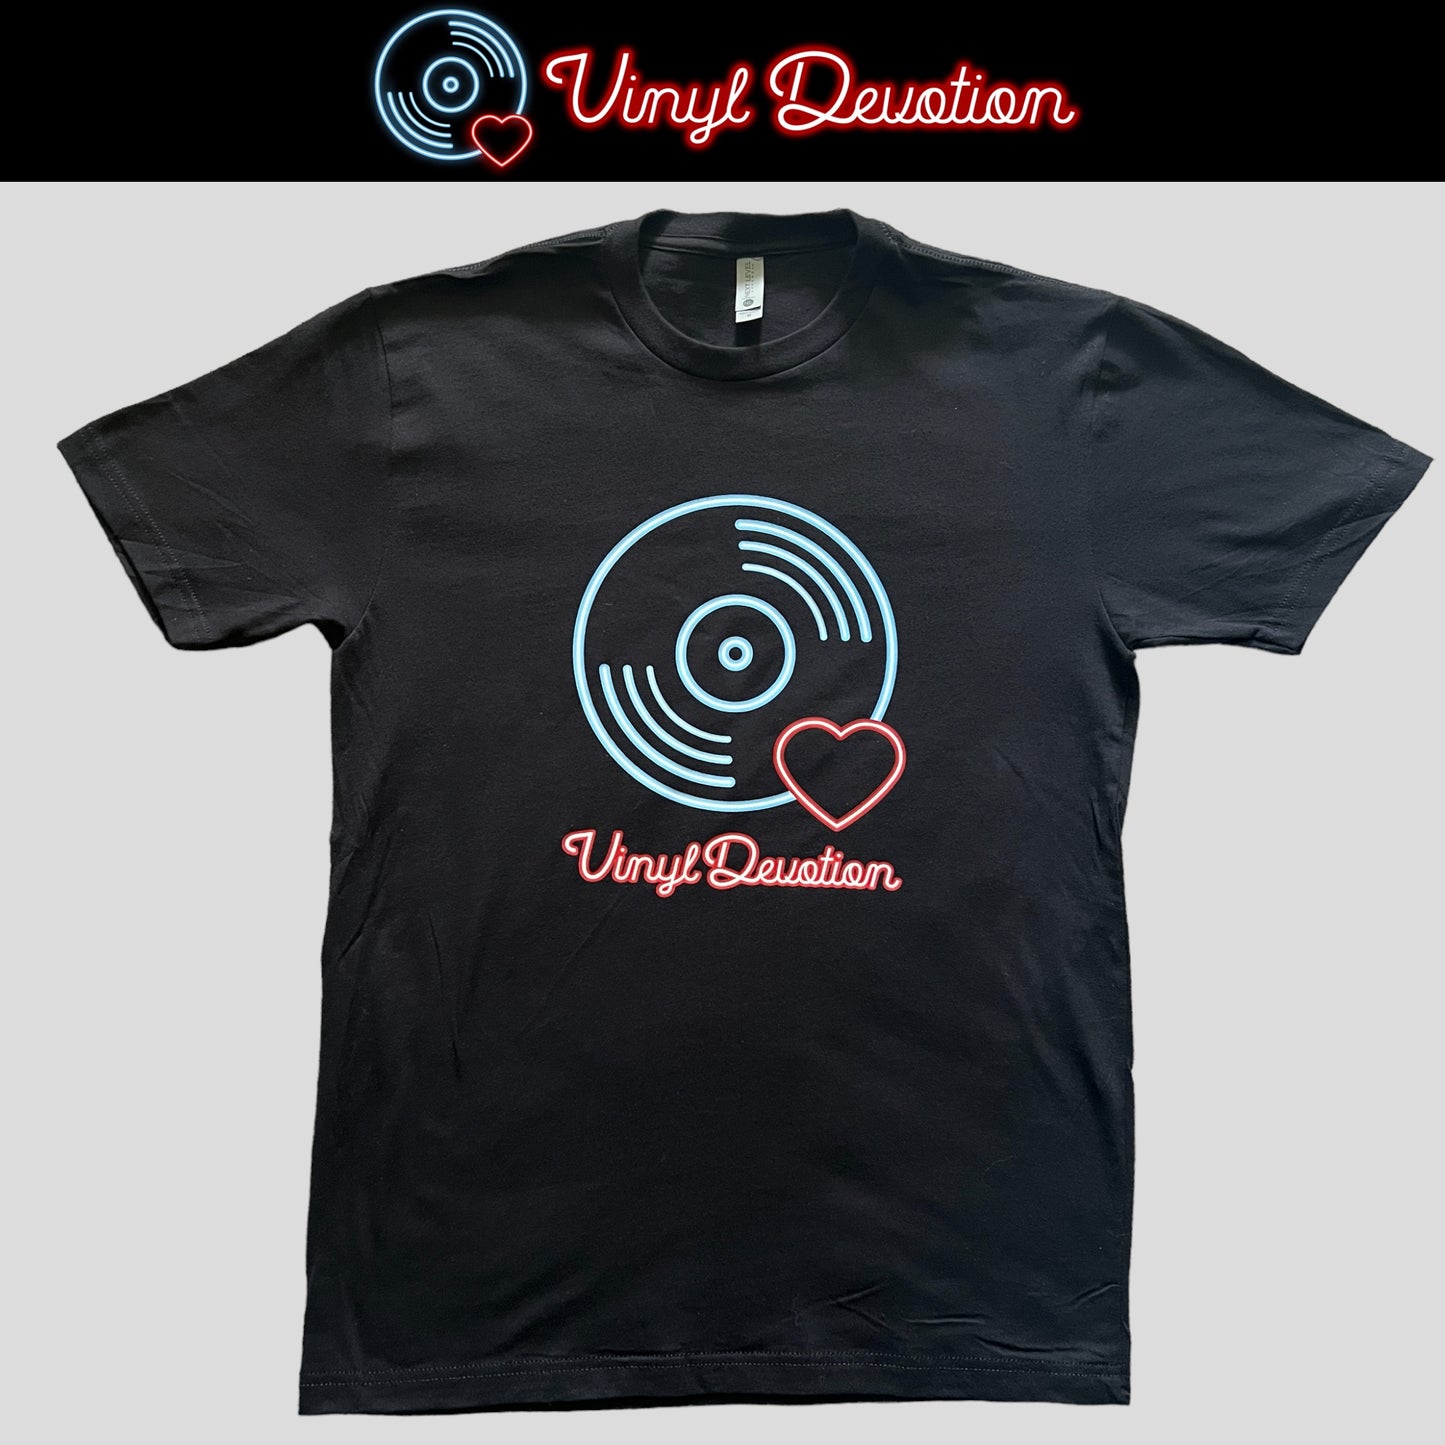 Vinyl Devotion Logo Shirt